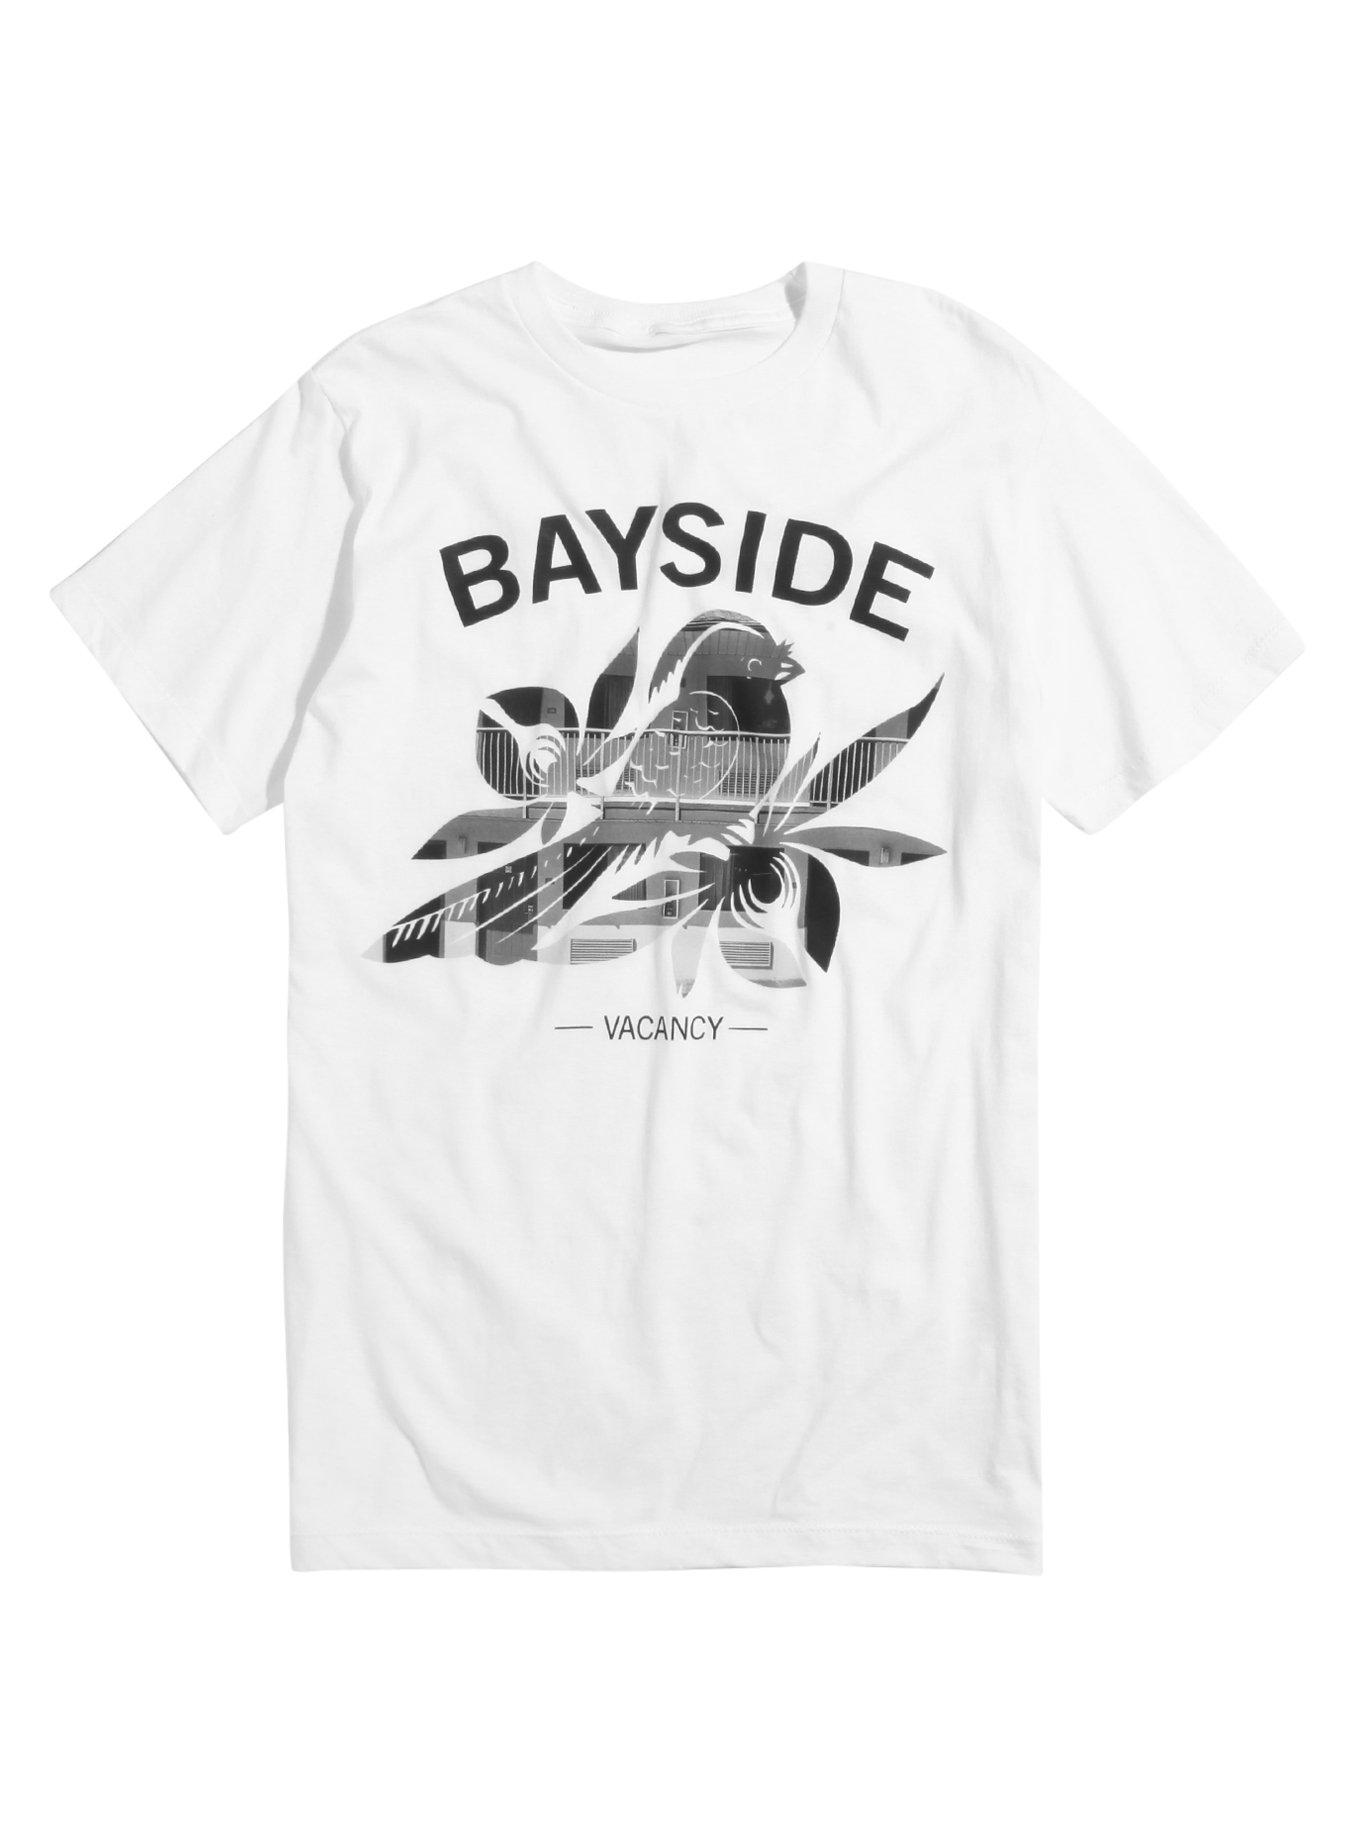 Bayside Vacancy T-Shirt, WHITE, hi-res